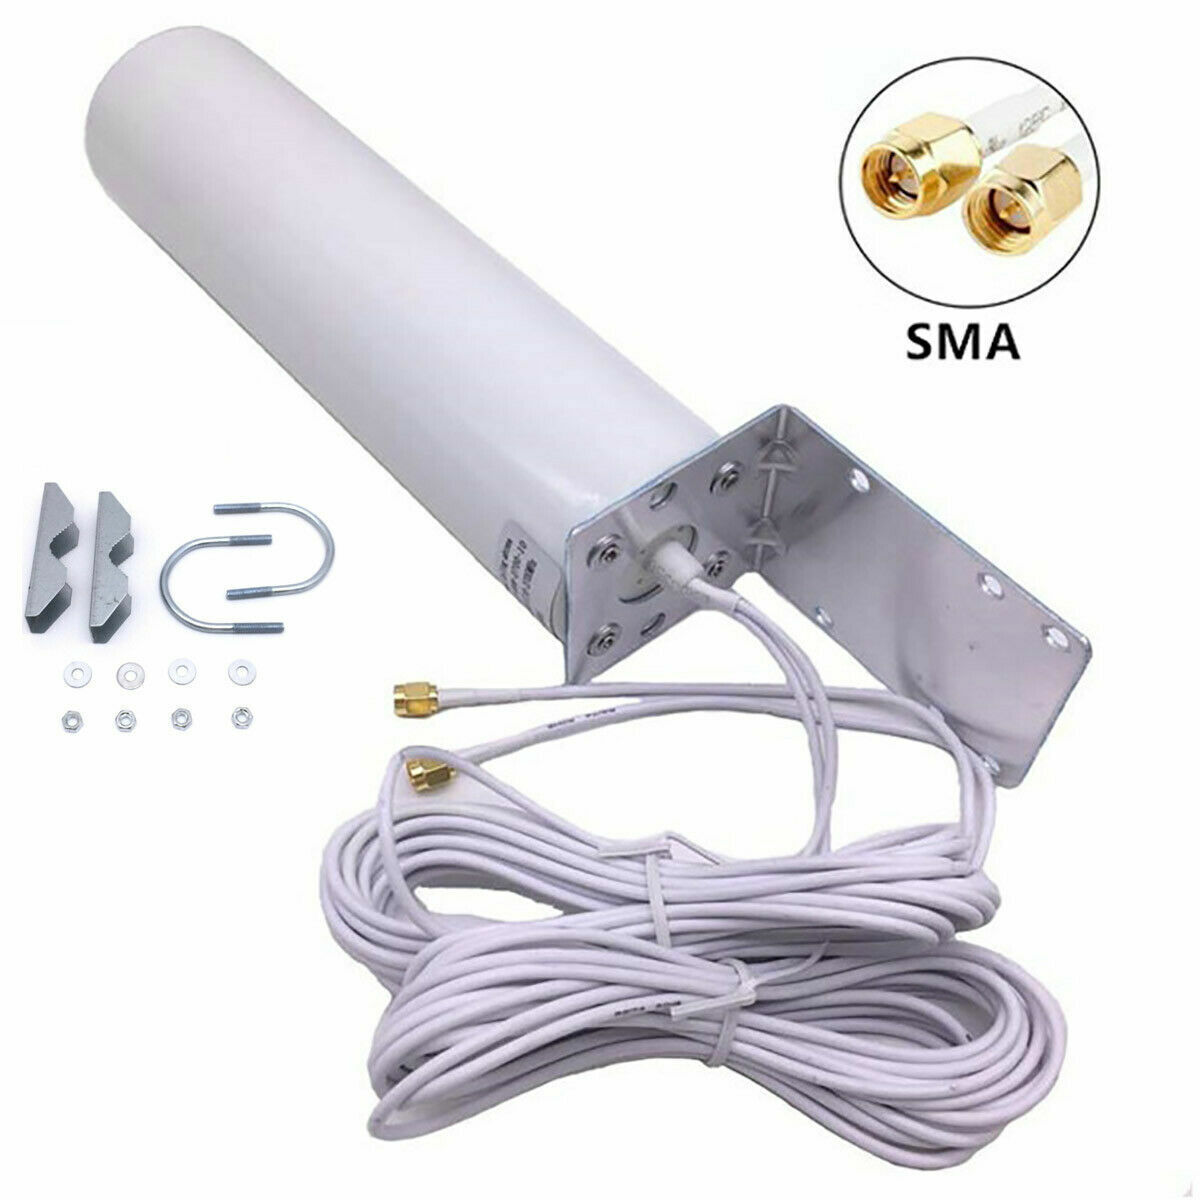 High Gain 10-12dBi Dual SMA Male 698-2700 MHz 3G/4G LTE Omni Outdoor Antenna AO